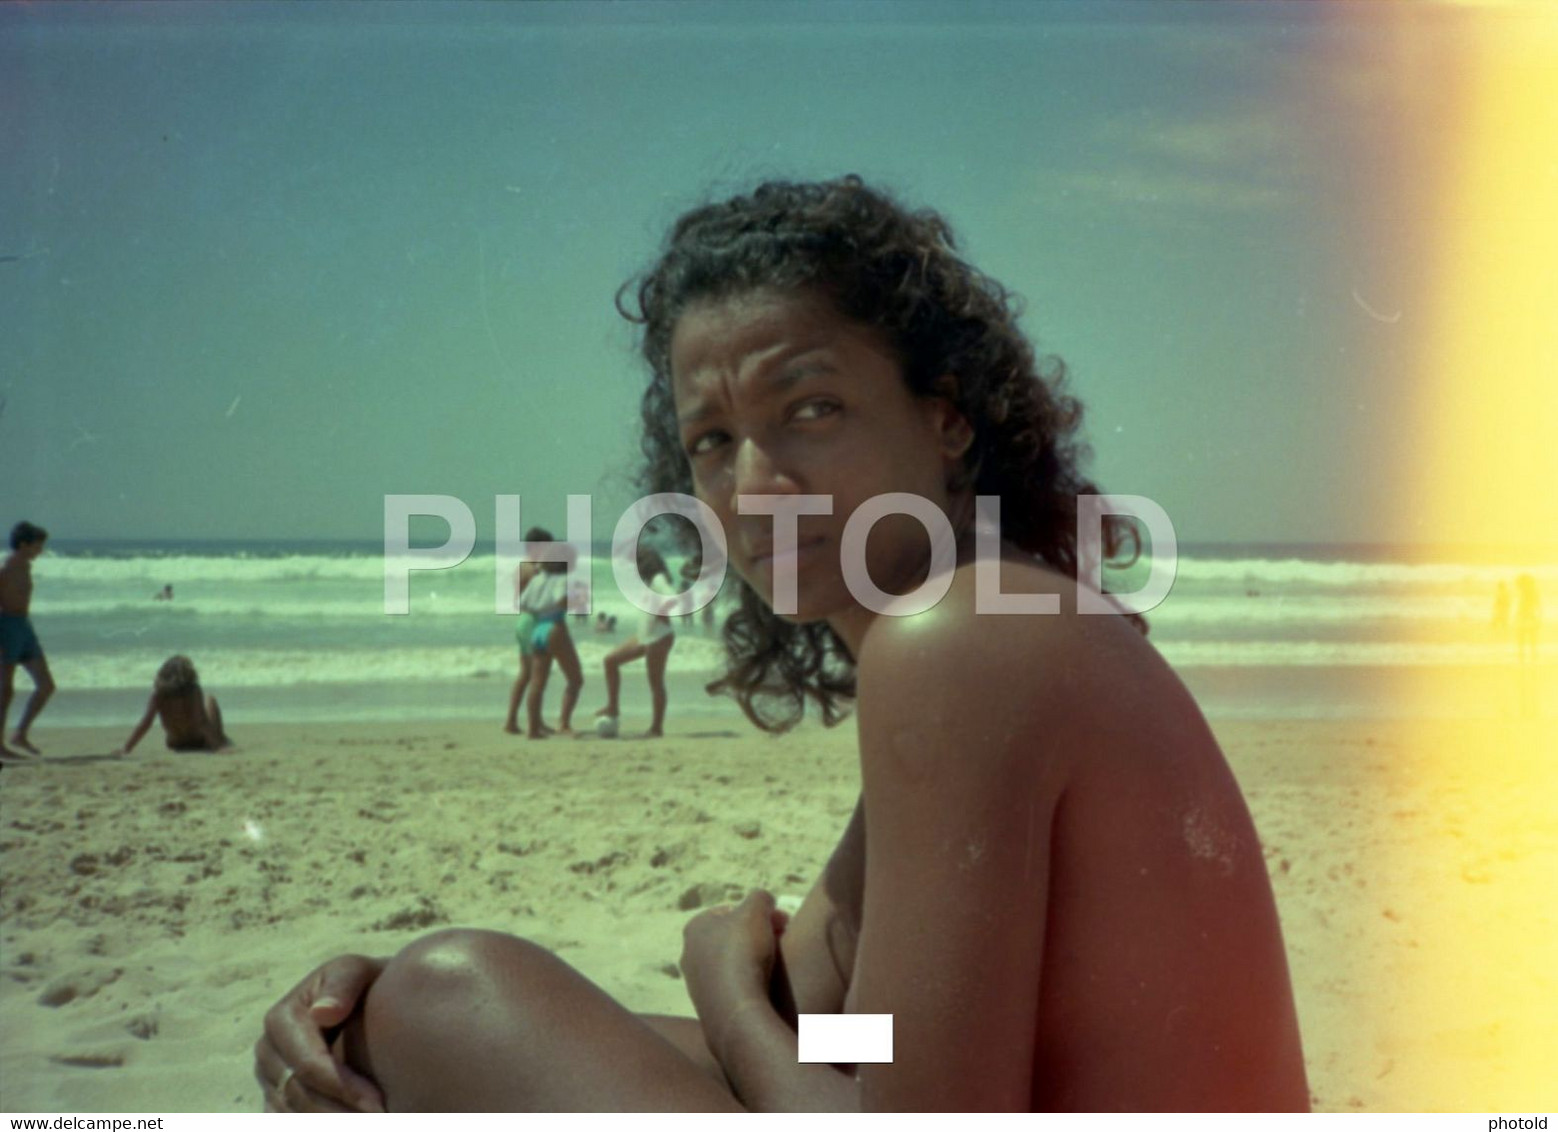 curtis chabot share amateur topless beach photos